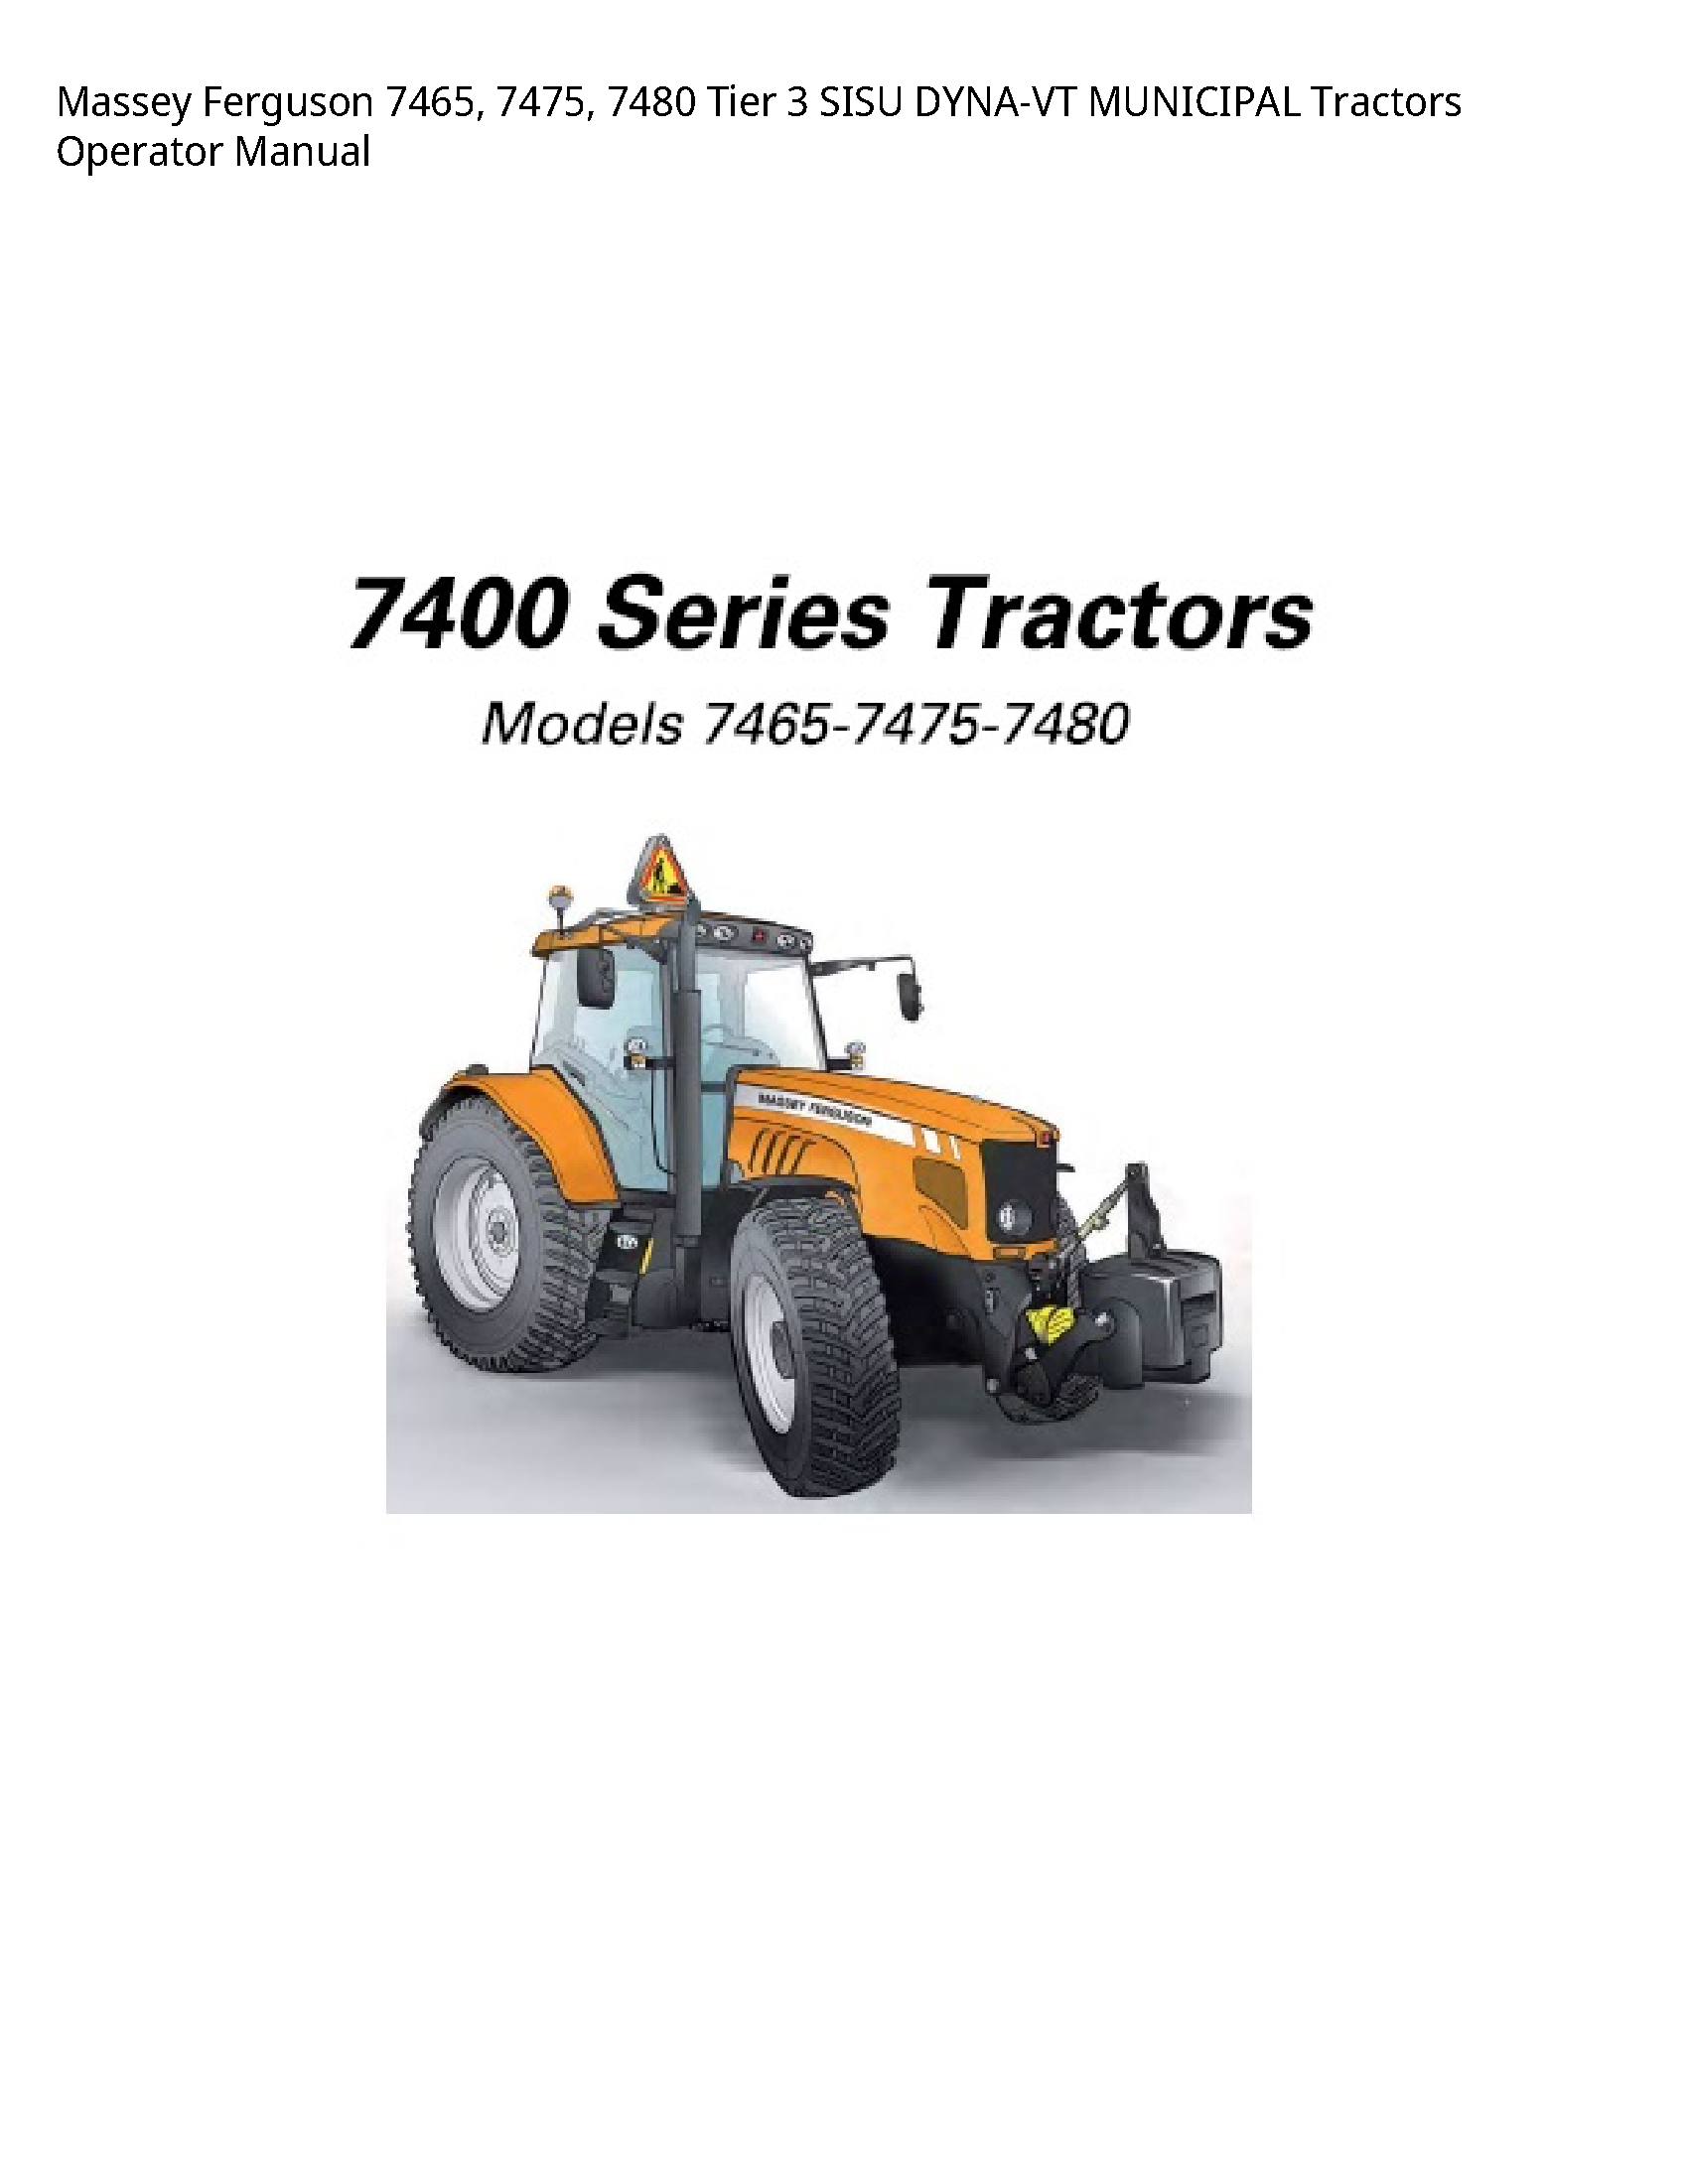 Massey Ferguson 7465 Tier SISU DYNA-VT MUNICIPAL Tractors Operator manual